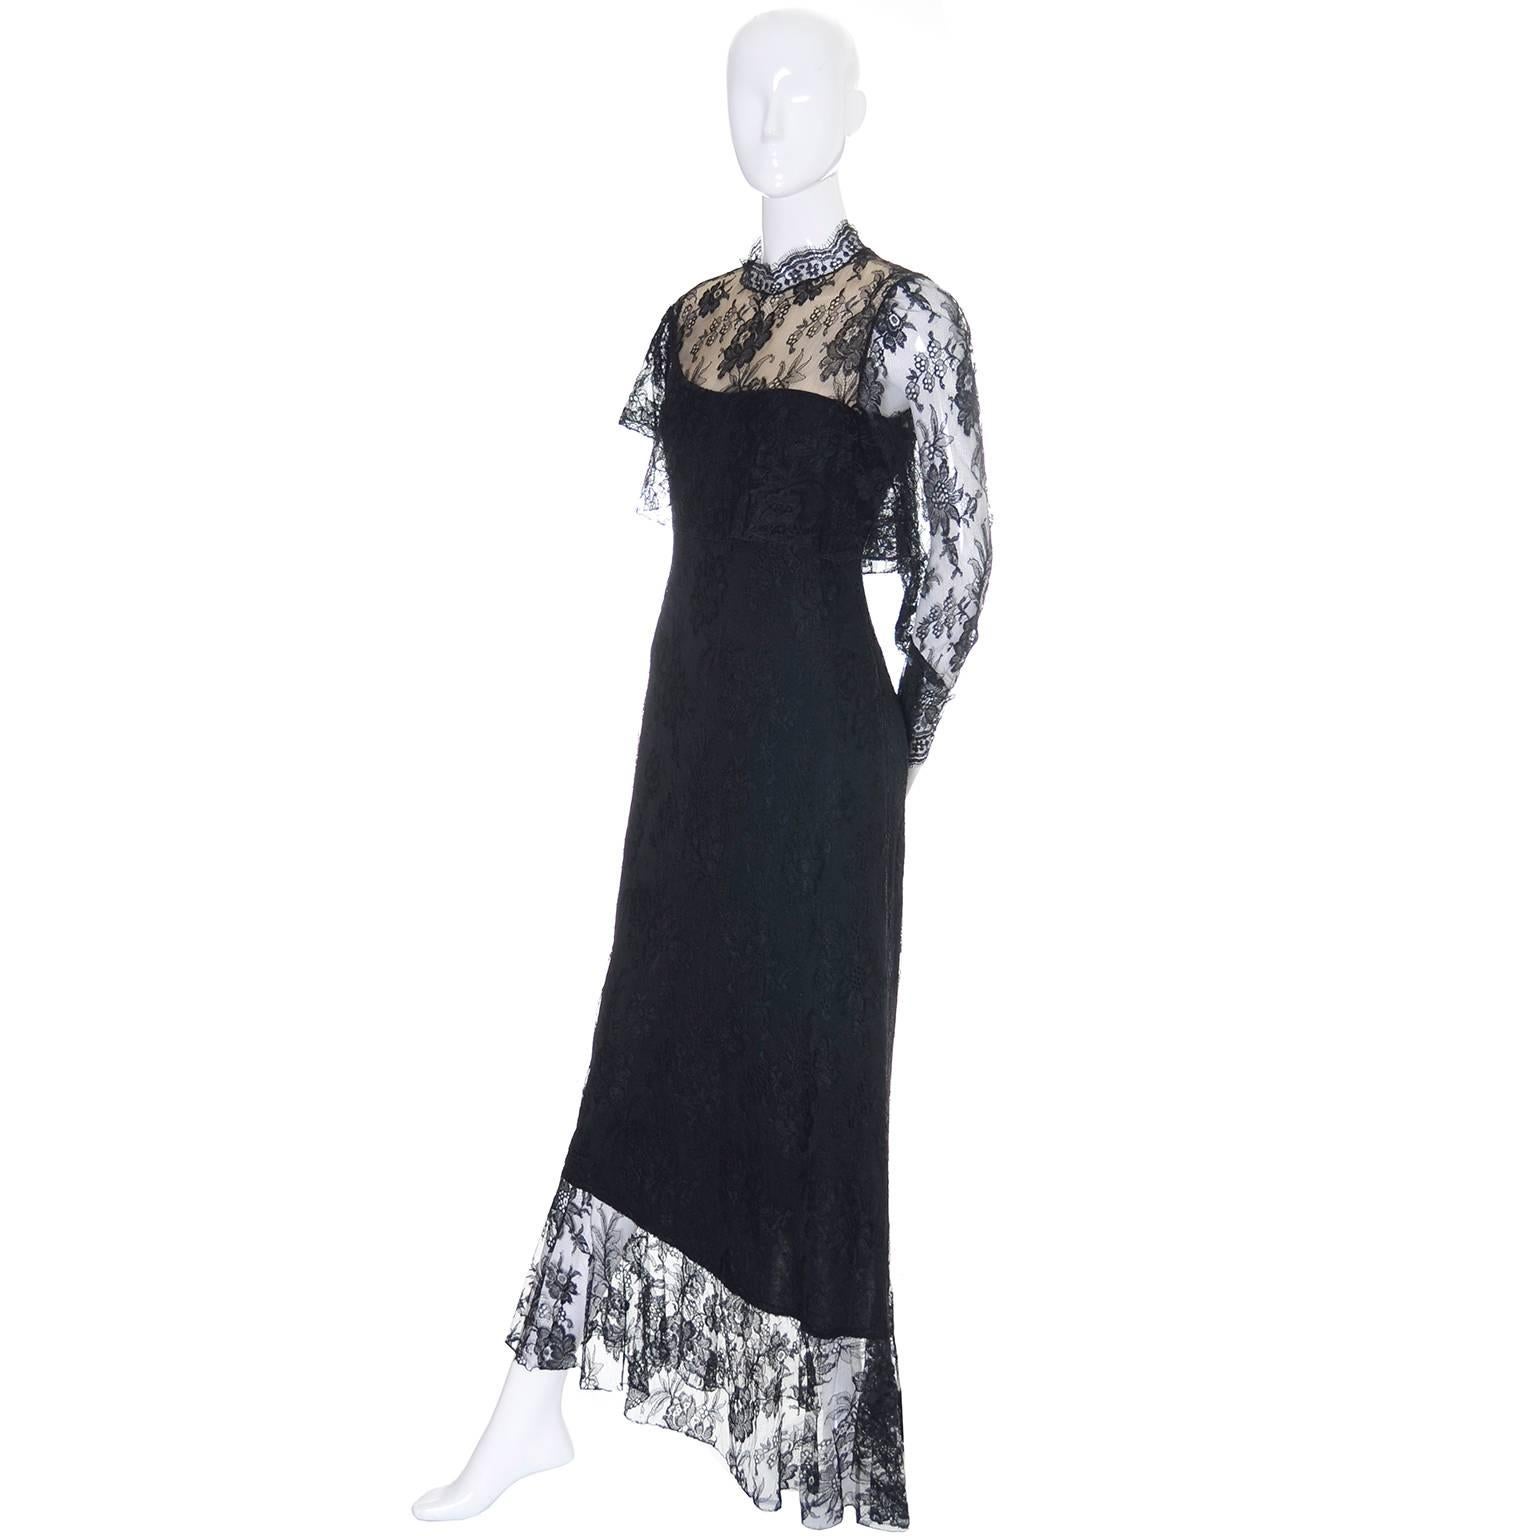 Loris Azzaro Vintage Dress Black Lace Victorian Style 1980s Evening Gown France 1